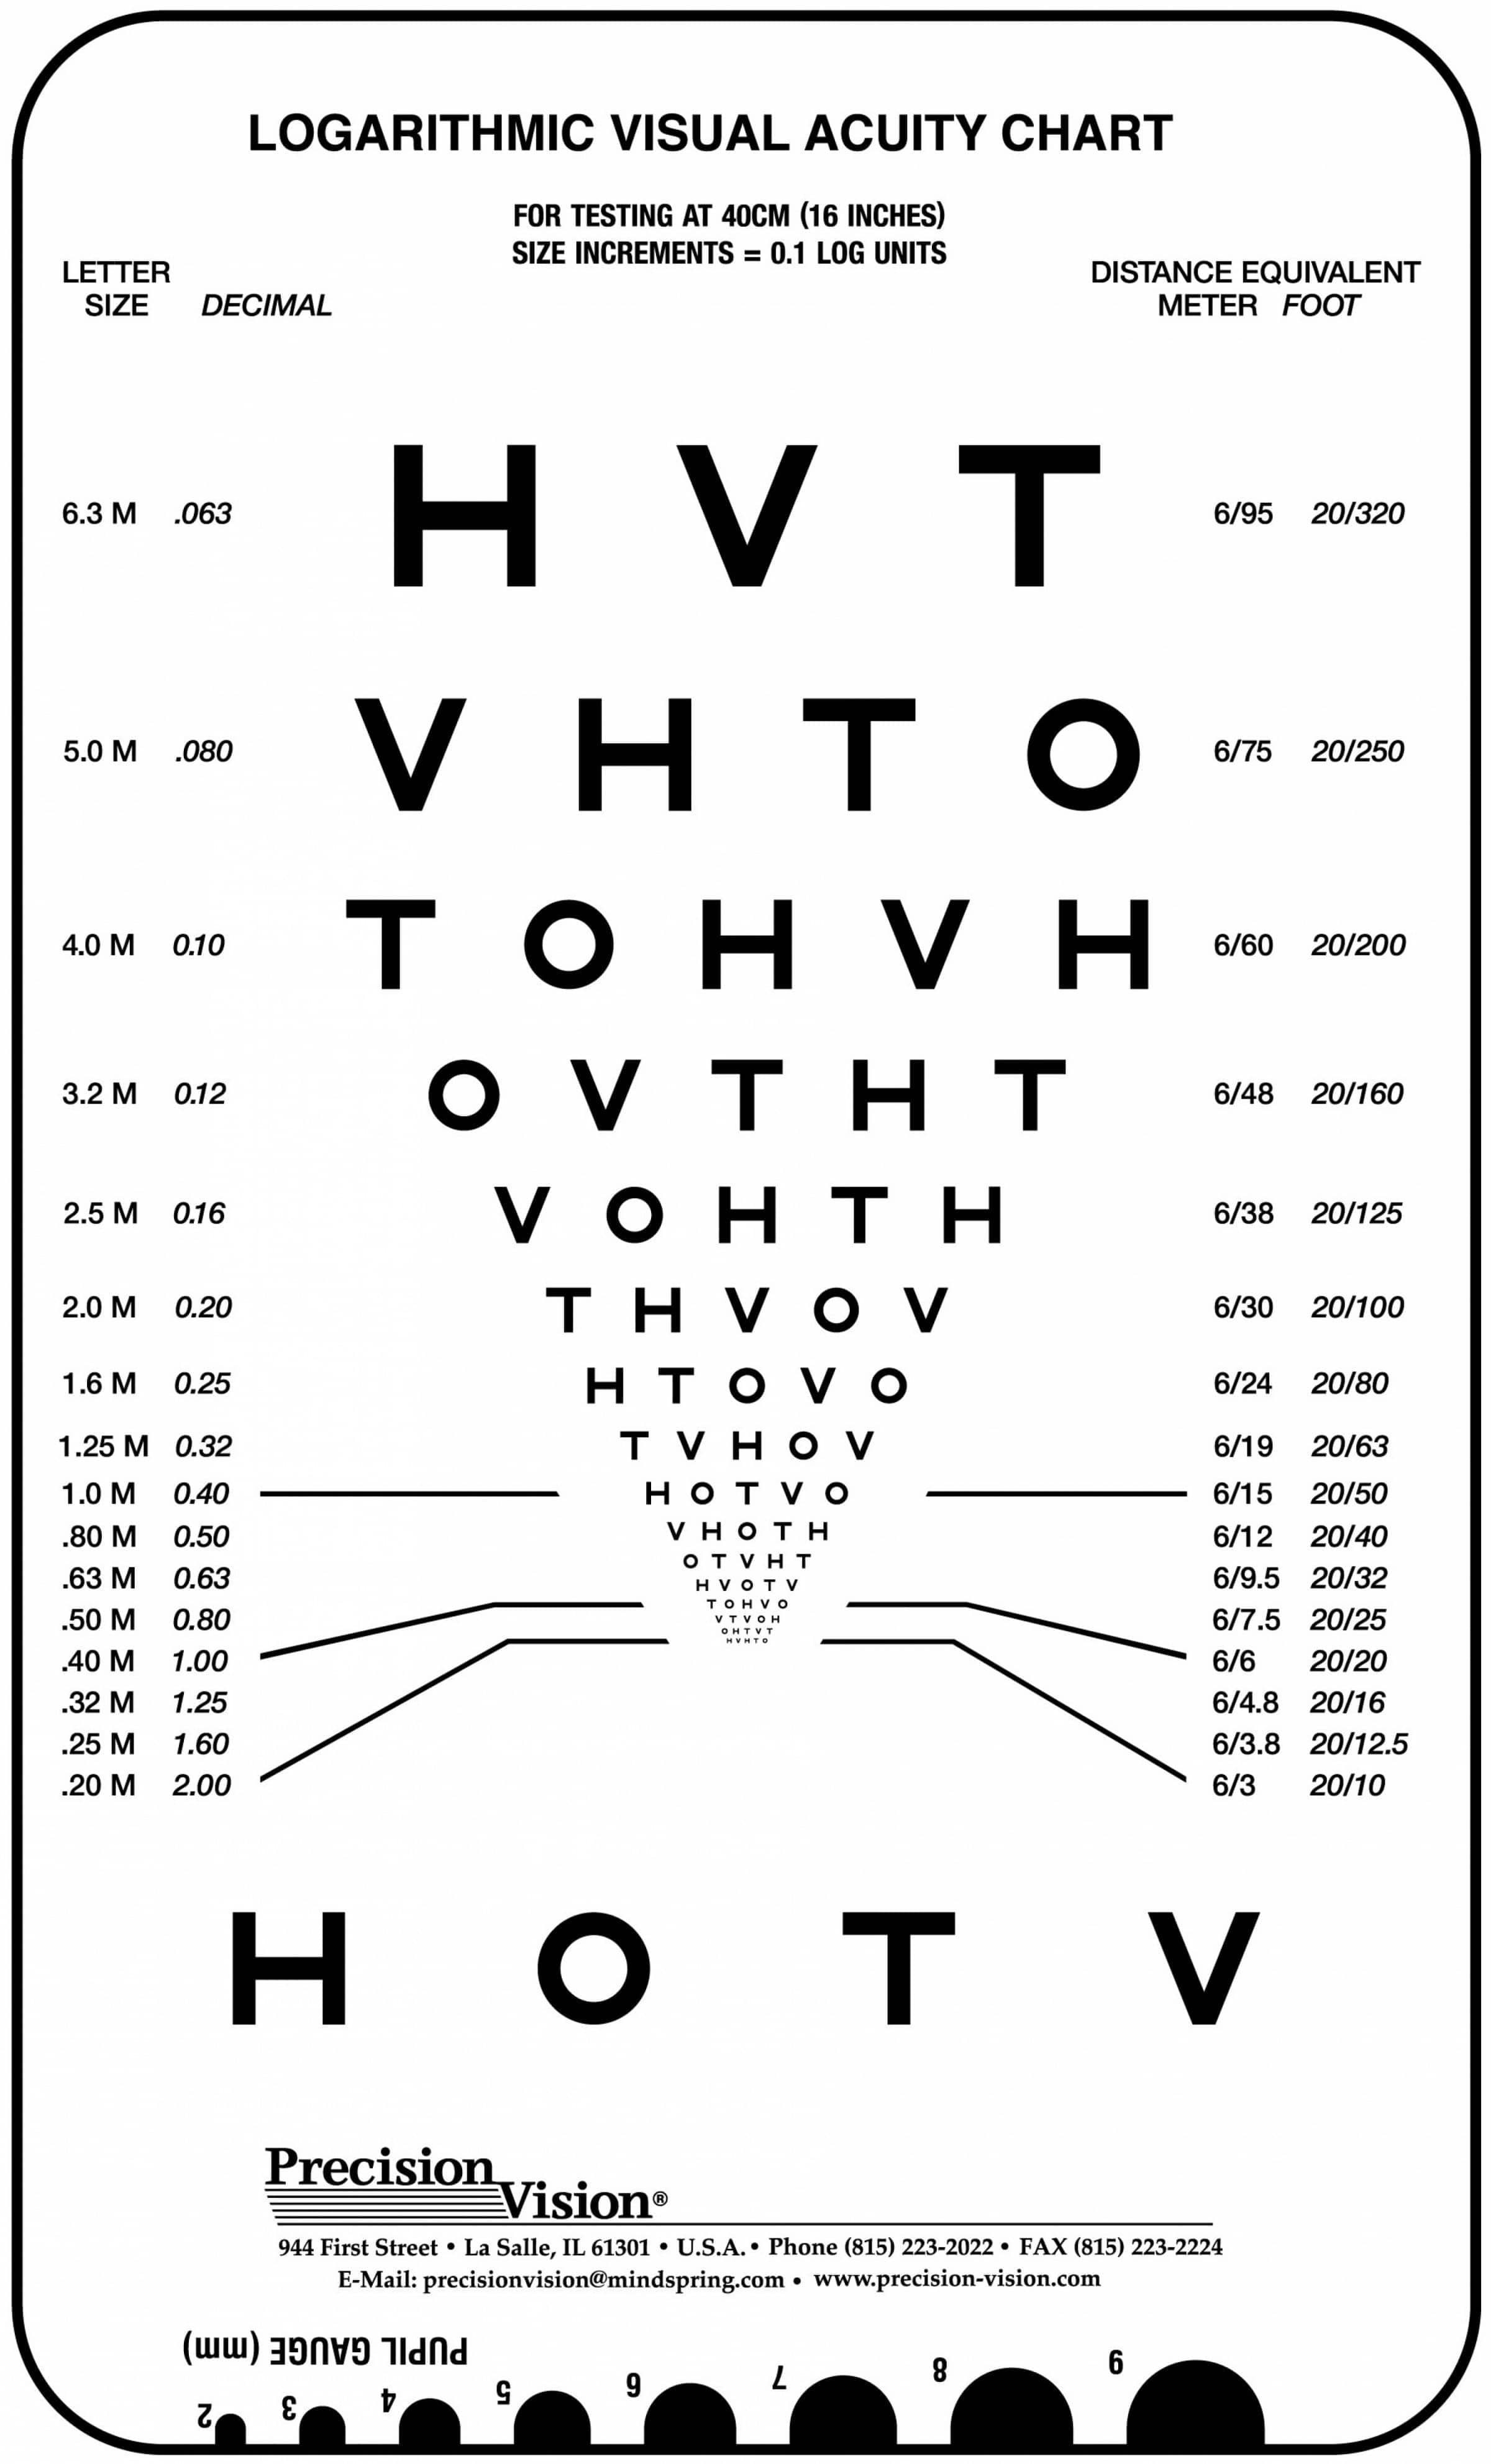 massvat-hotv-logarithmic-visual-acuity-chart-precision-vision